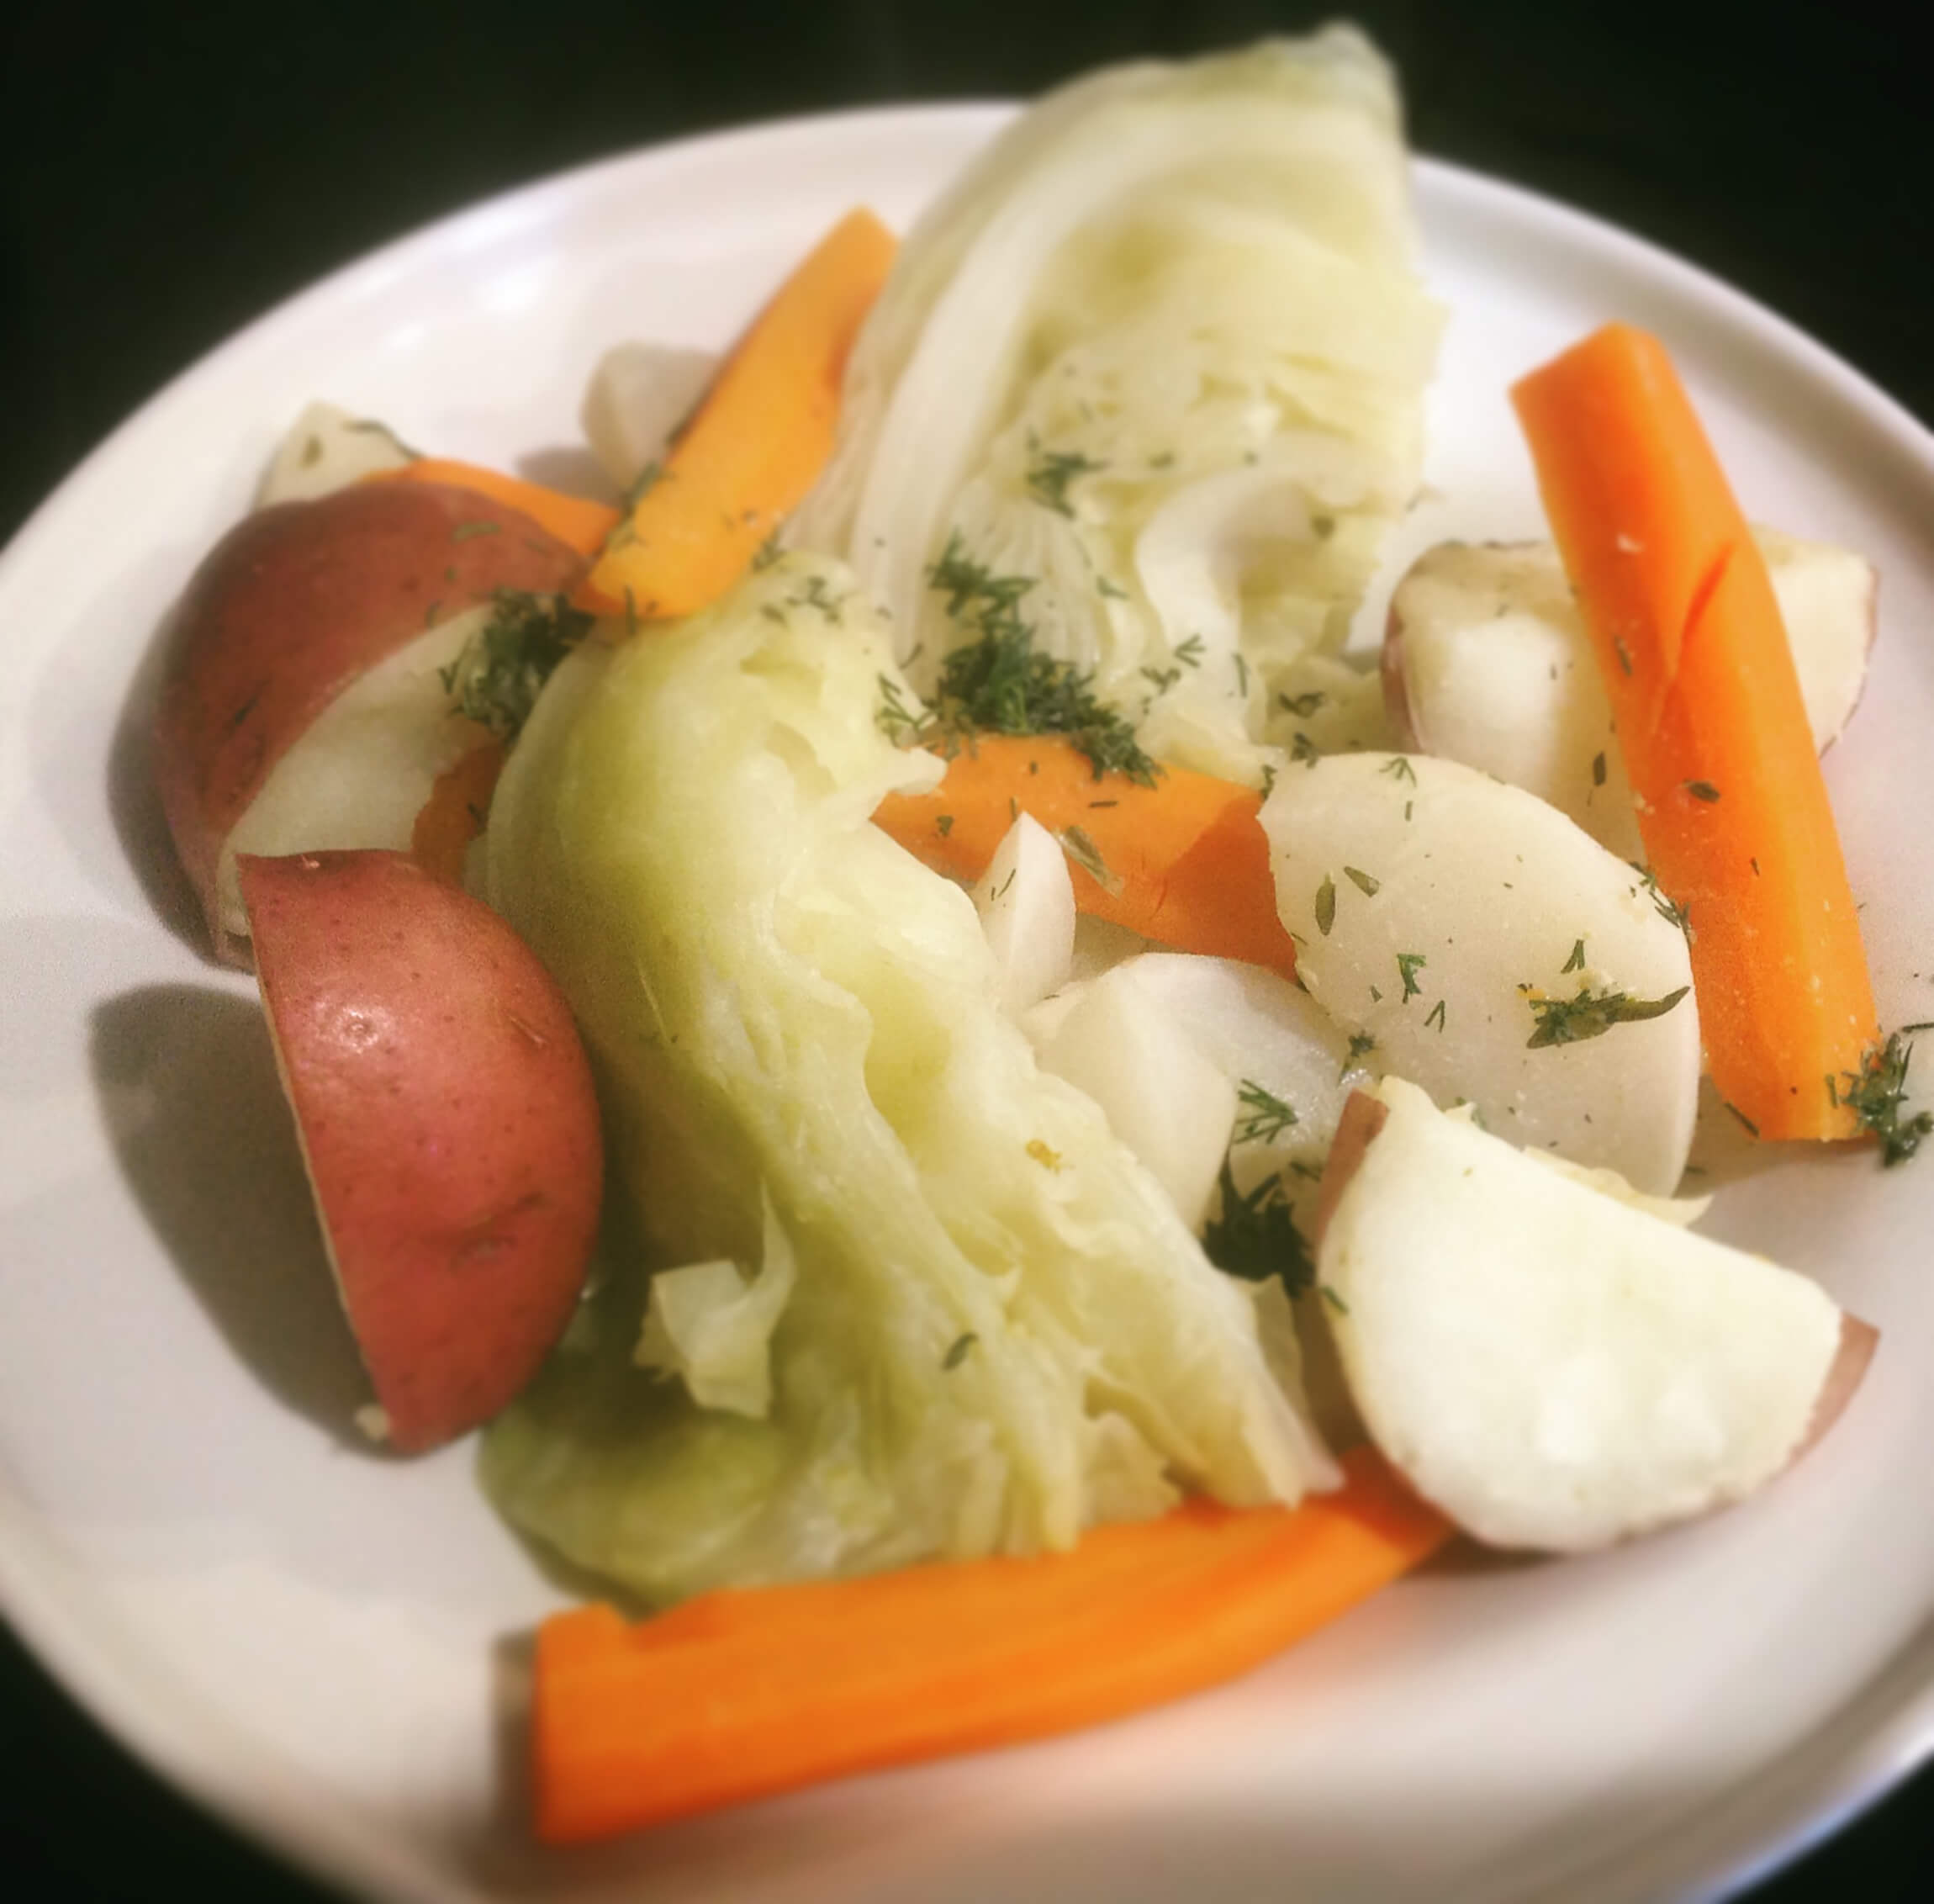 Irish boiled cabbage and potatoes